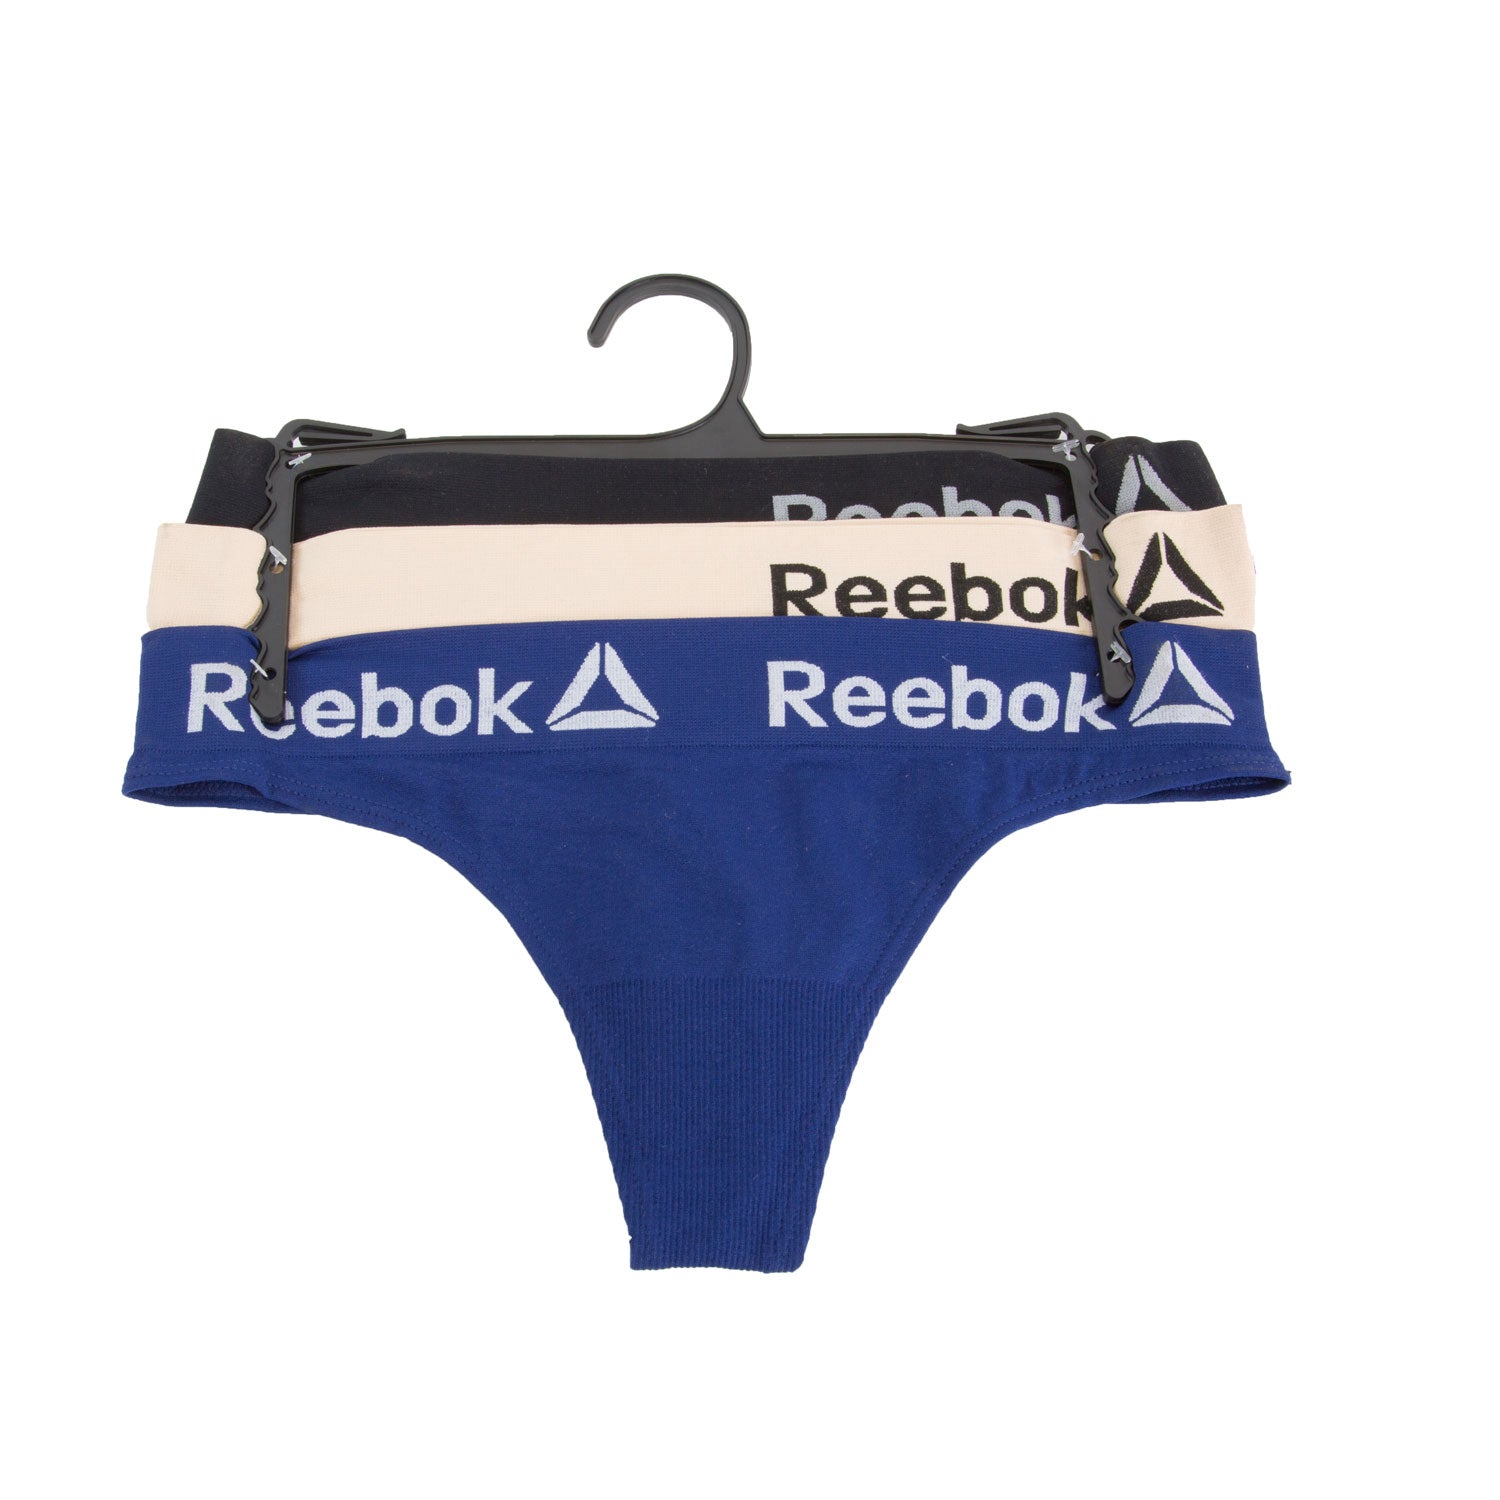 Reebok Women's Underwear - Seamless Thong (3 Pack)